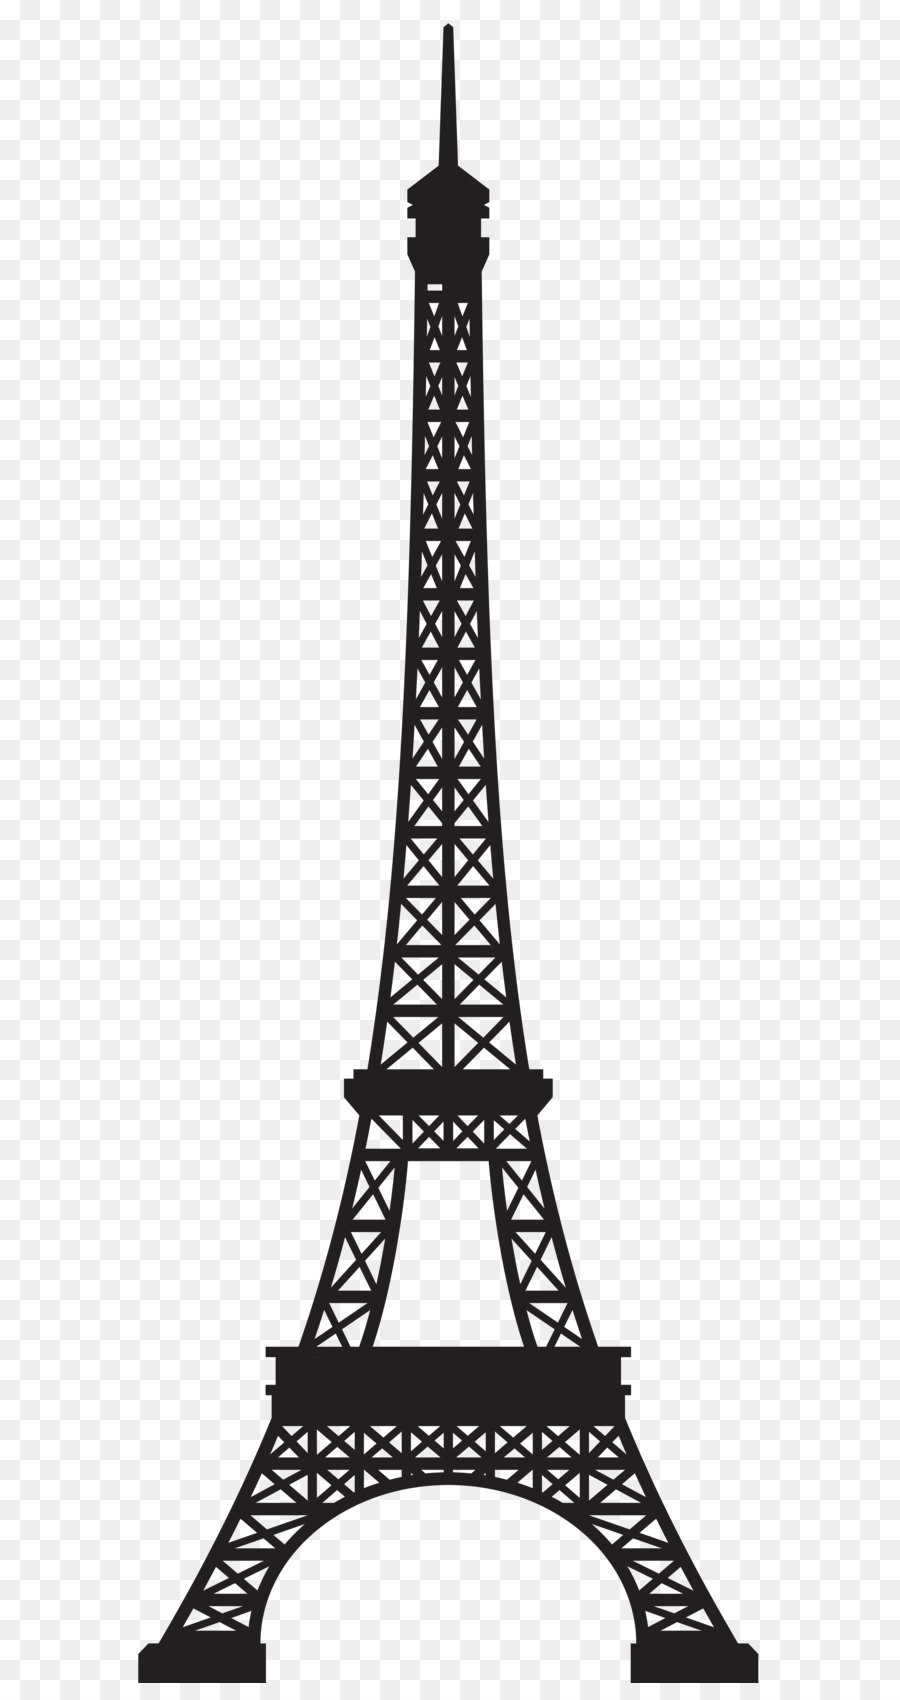 Eiffel Tower Landmark Clip art - Eiffel Tower Silhouette PNG Clip Art Image png download - 2703*7000 - Free Transparent Eiffel Tower png Download.